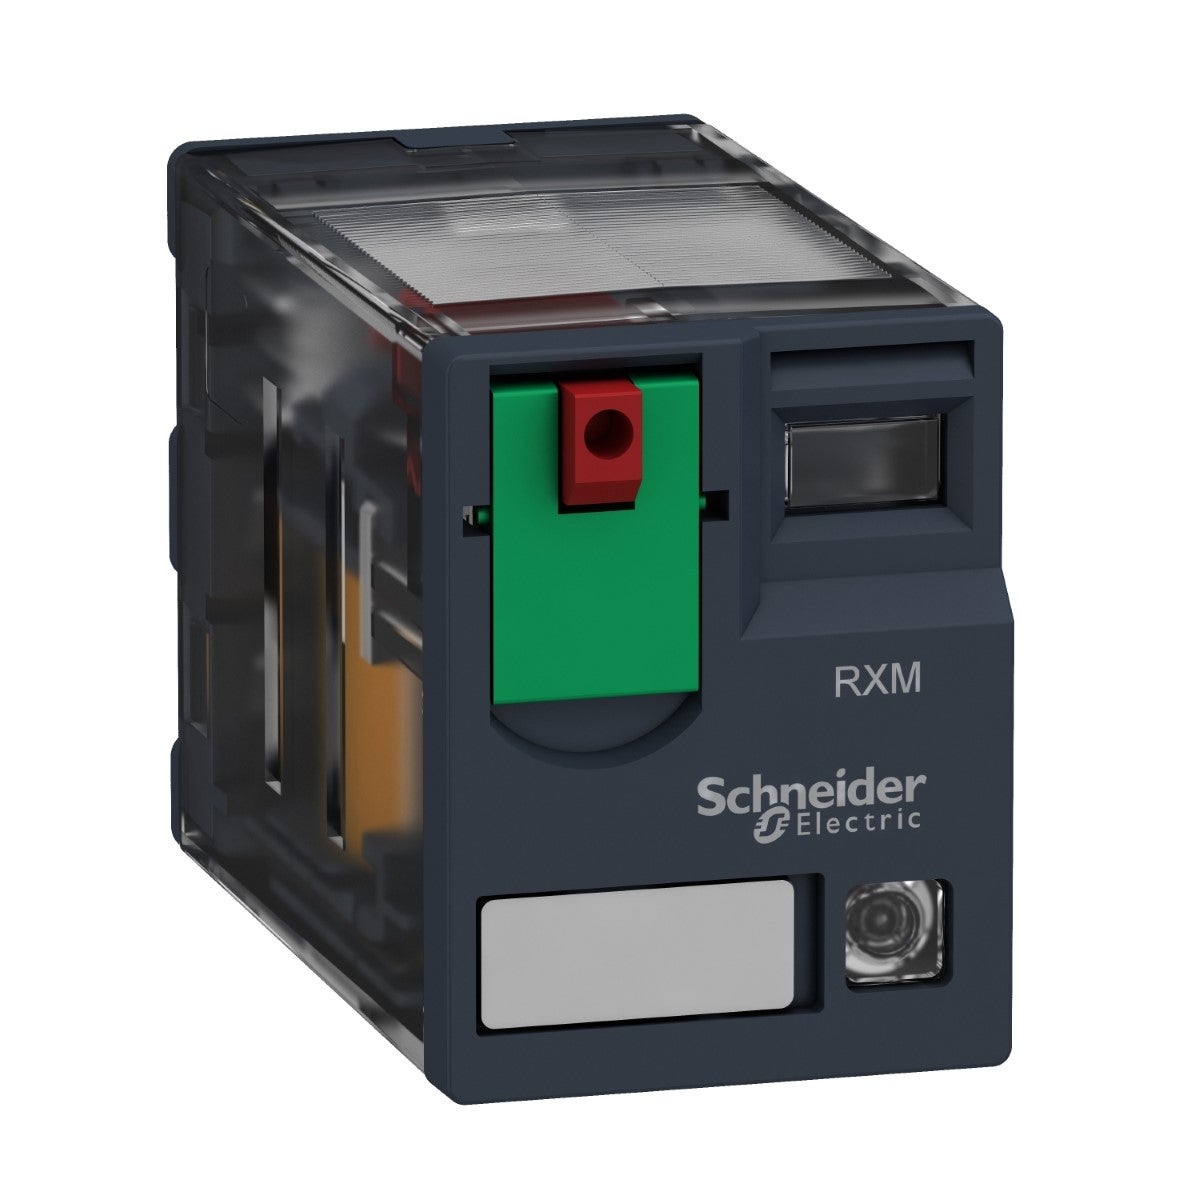 Schneider Electric Miniature Plug-in relay - Zelio RXM 4 C/O 48 V AC 6 A with LED